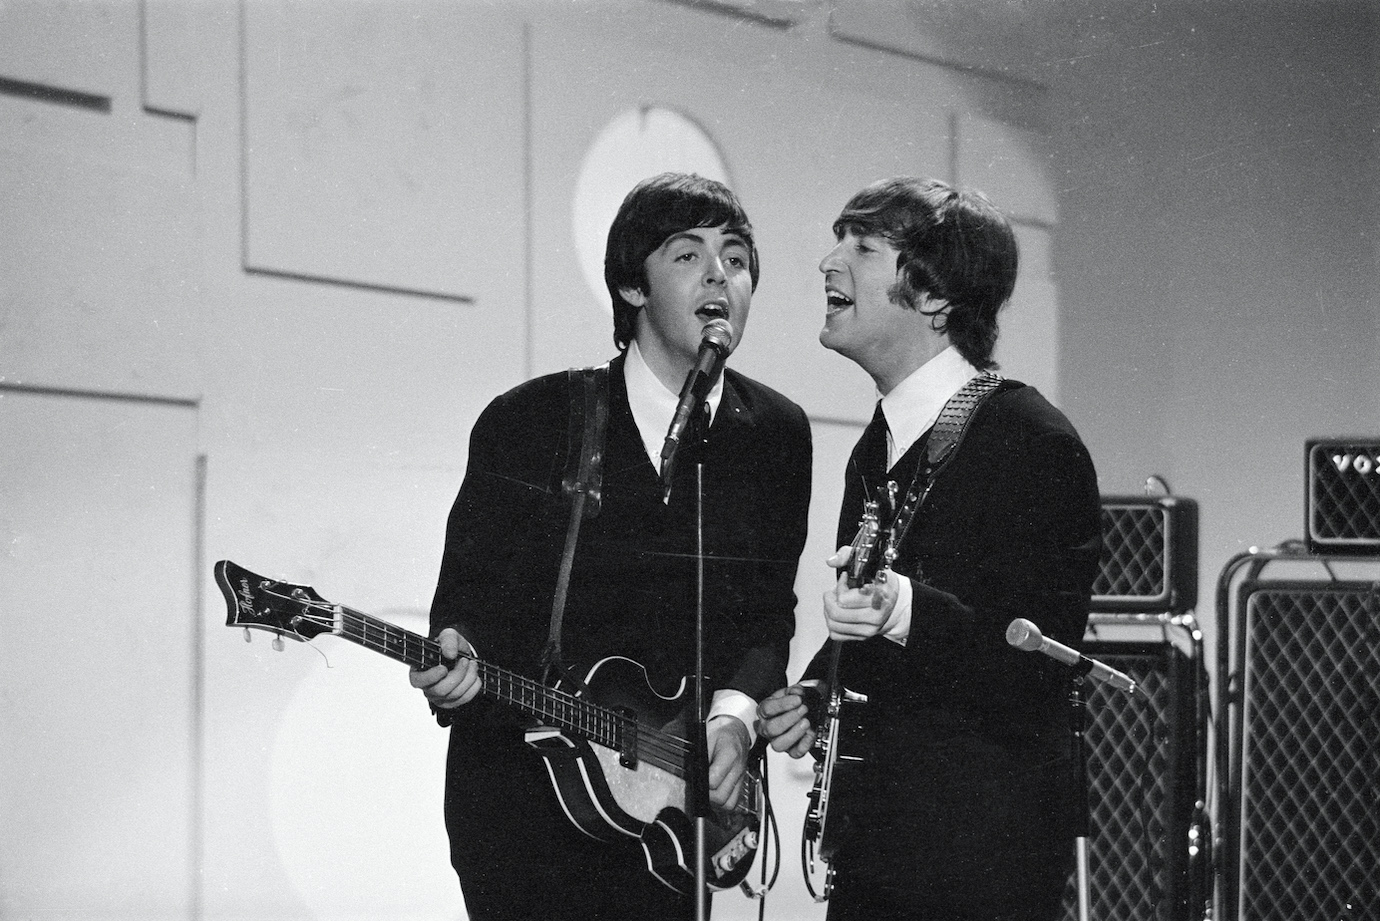 Paul McCartney and John Lennon play with The Beatles on The Ed Sullivan Show in 1965